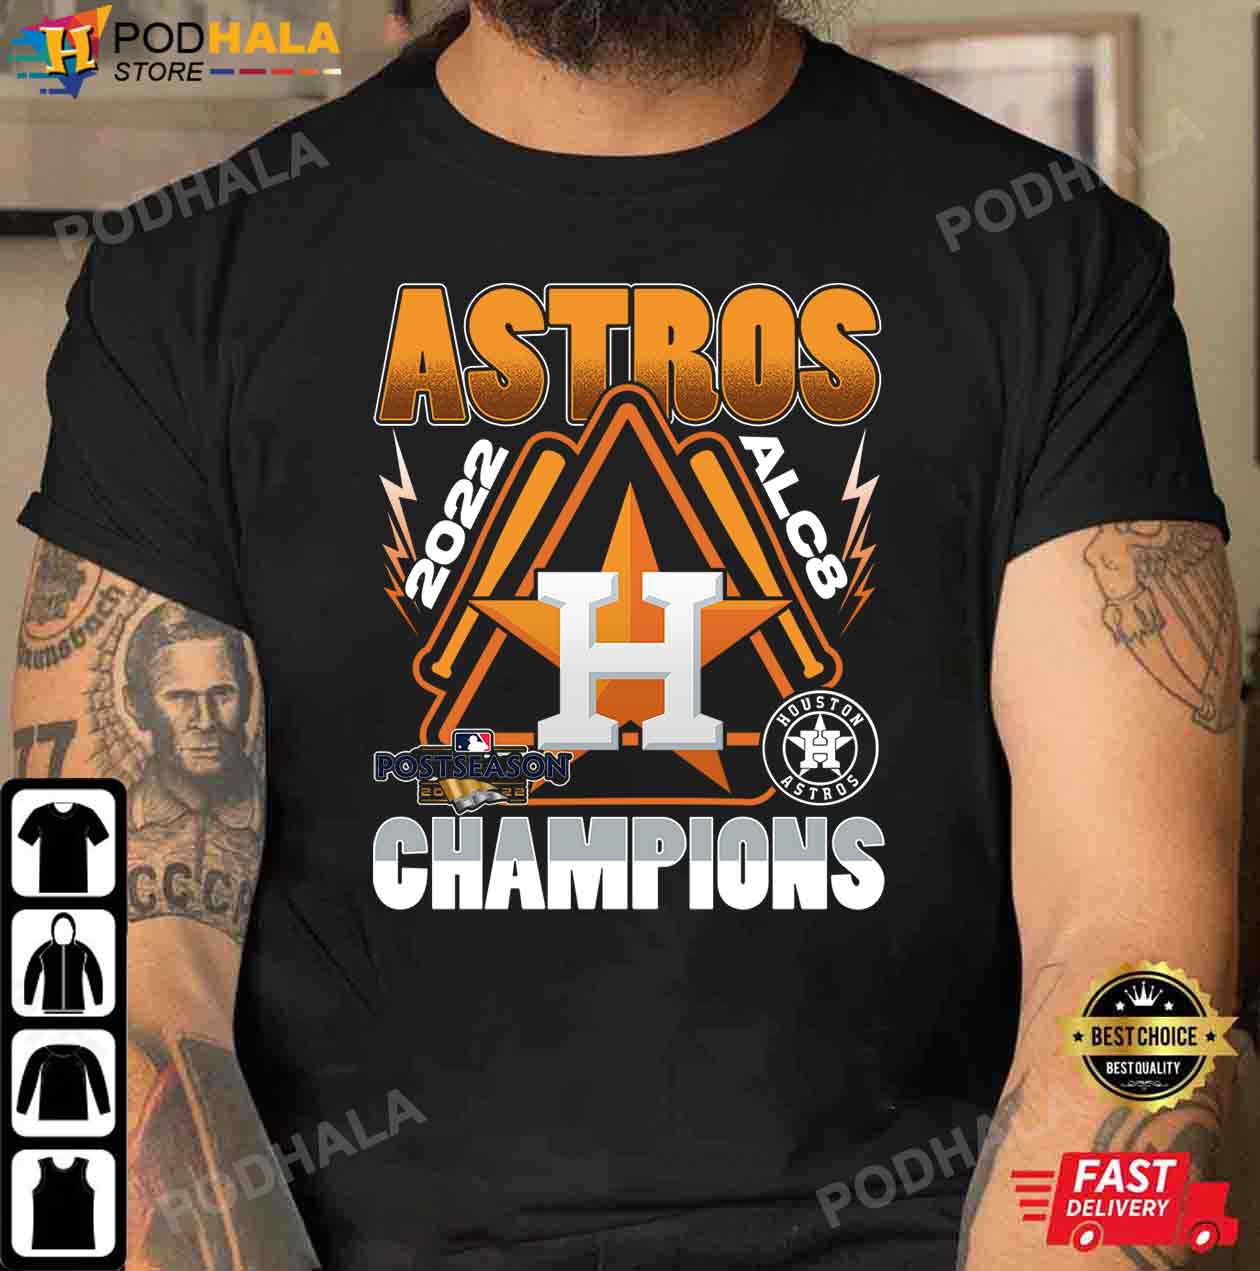 astros world series champ gear